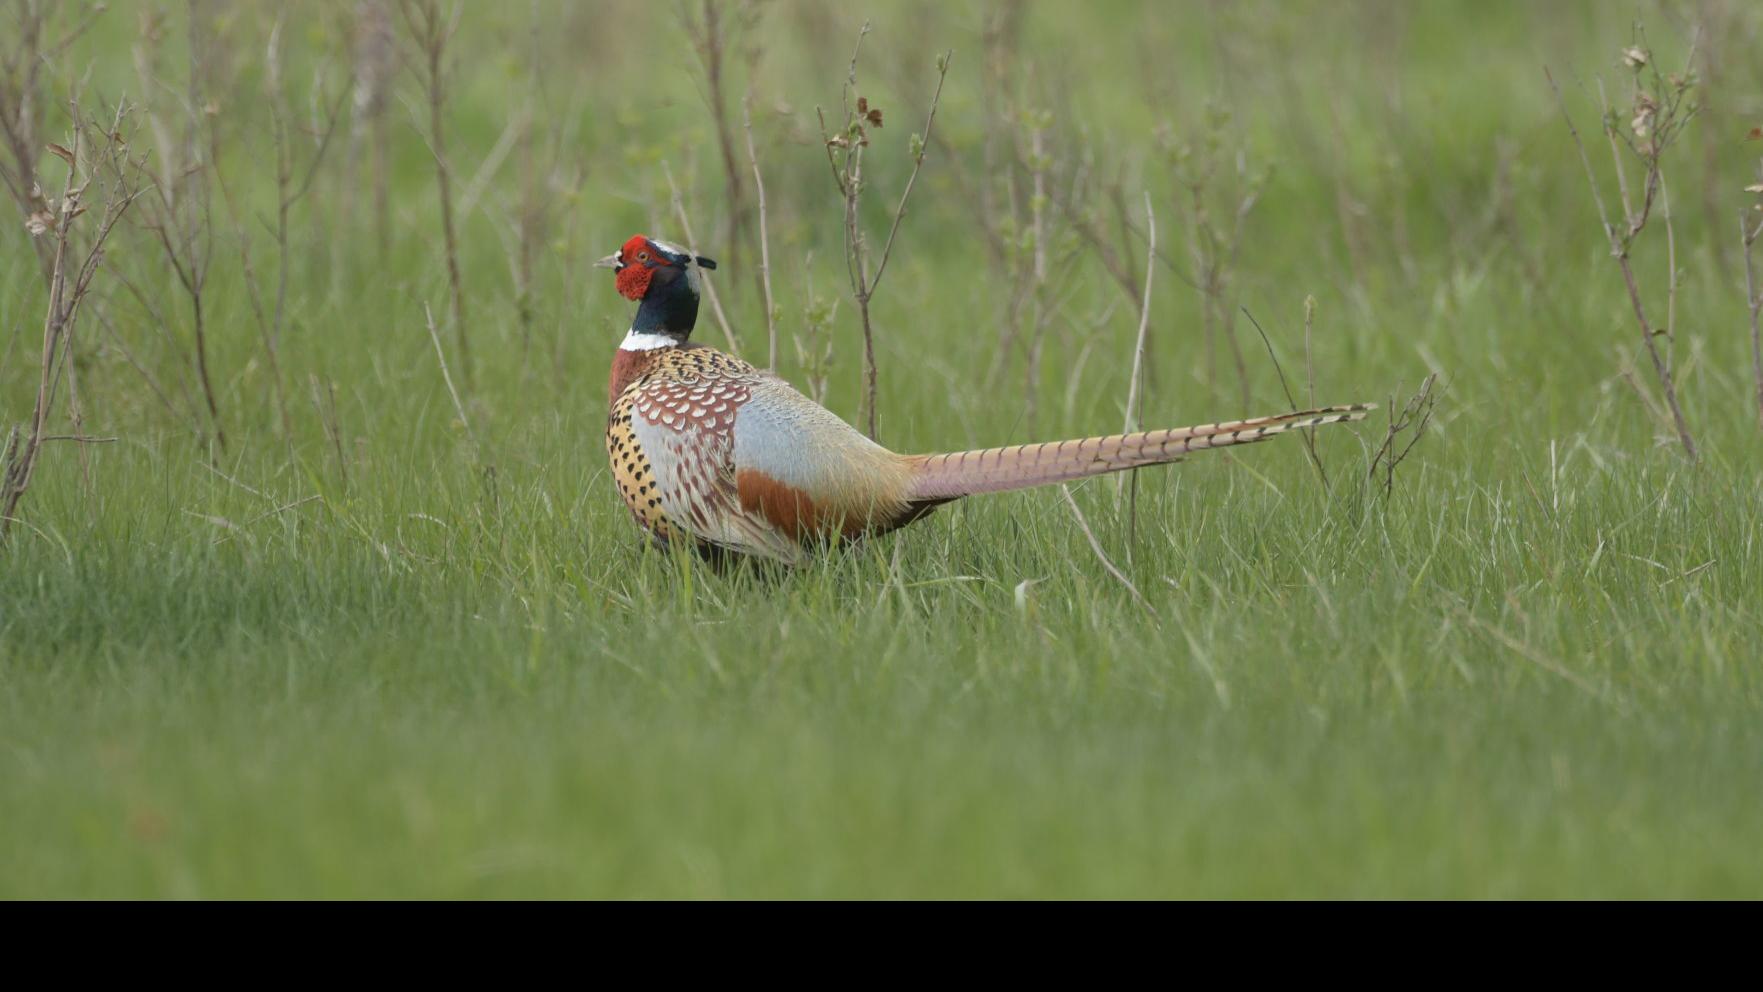 Pheasant Population Up In North Dakota Hunters Still Will Need To Find Hot Spots State Regional Bismarcktribune Com